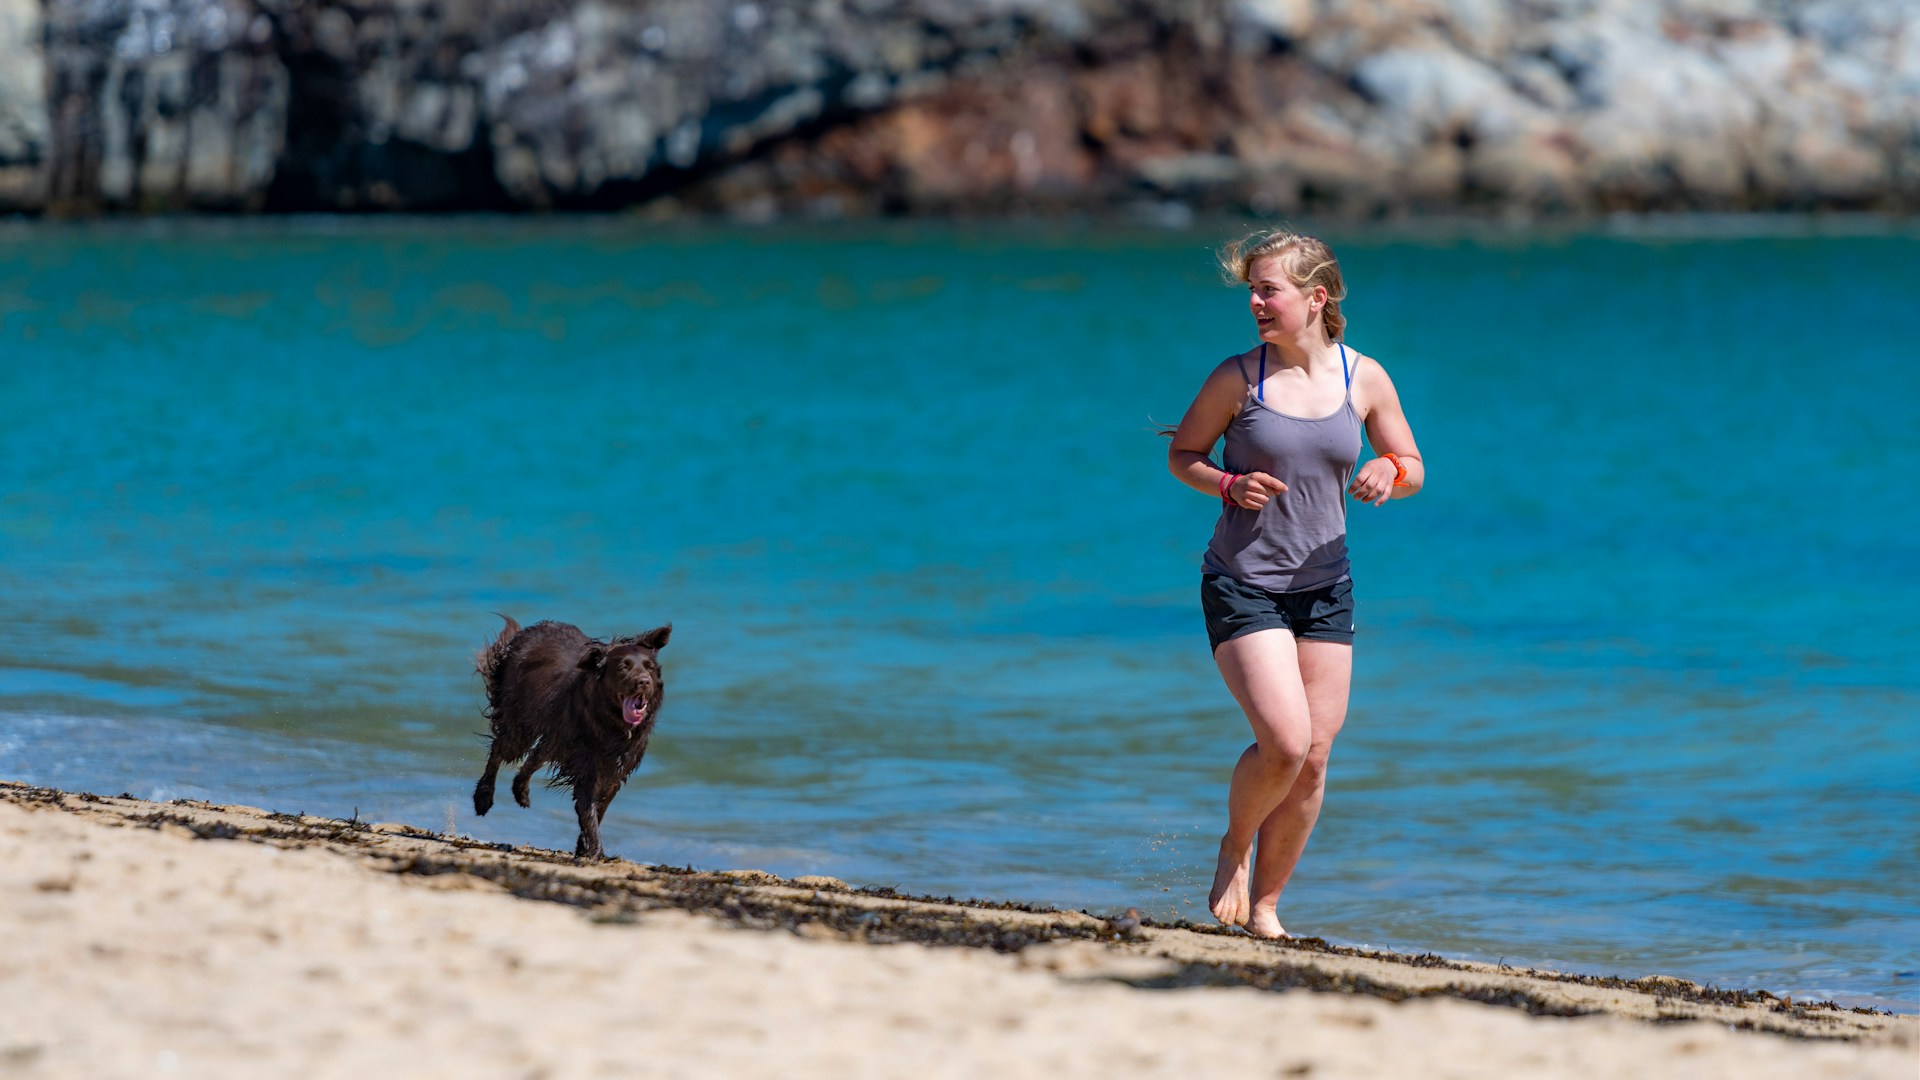 A woman running on a beach followed by a black dog